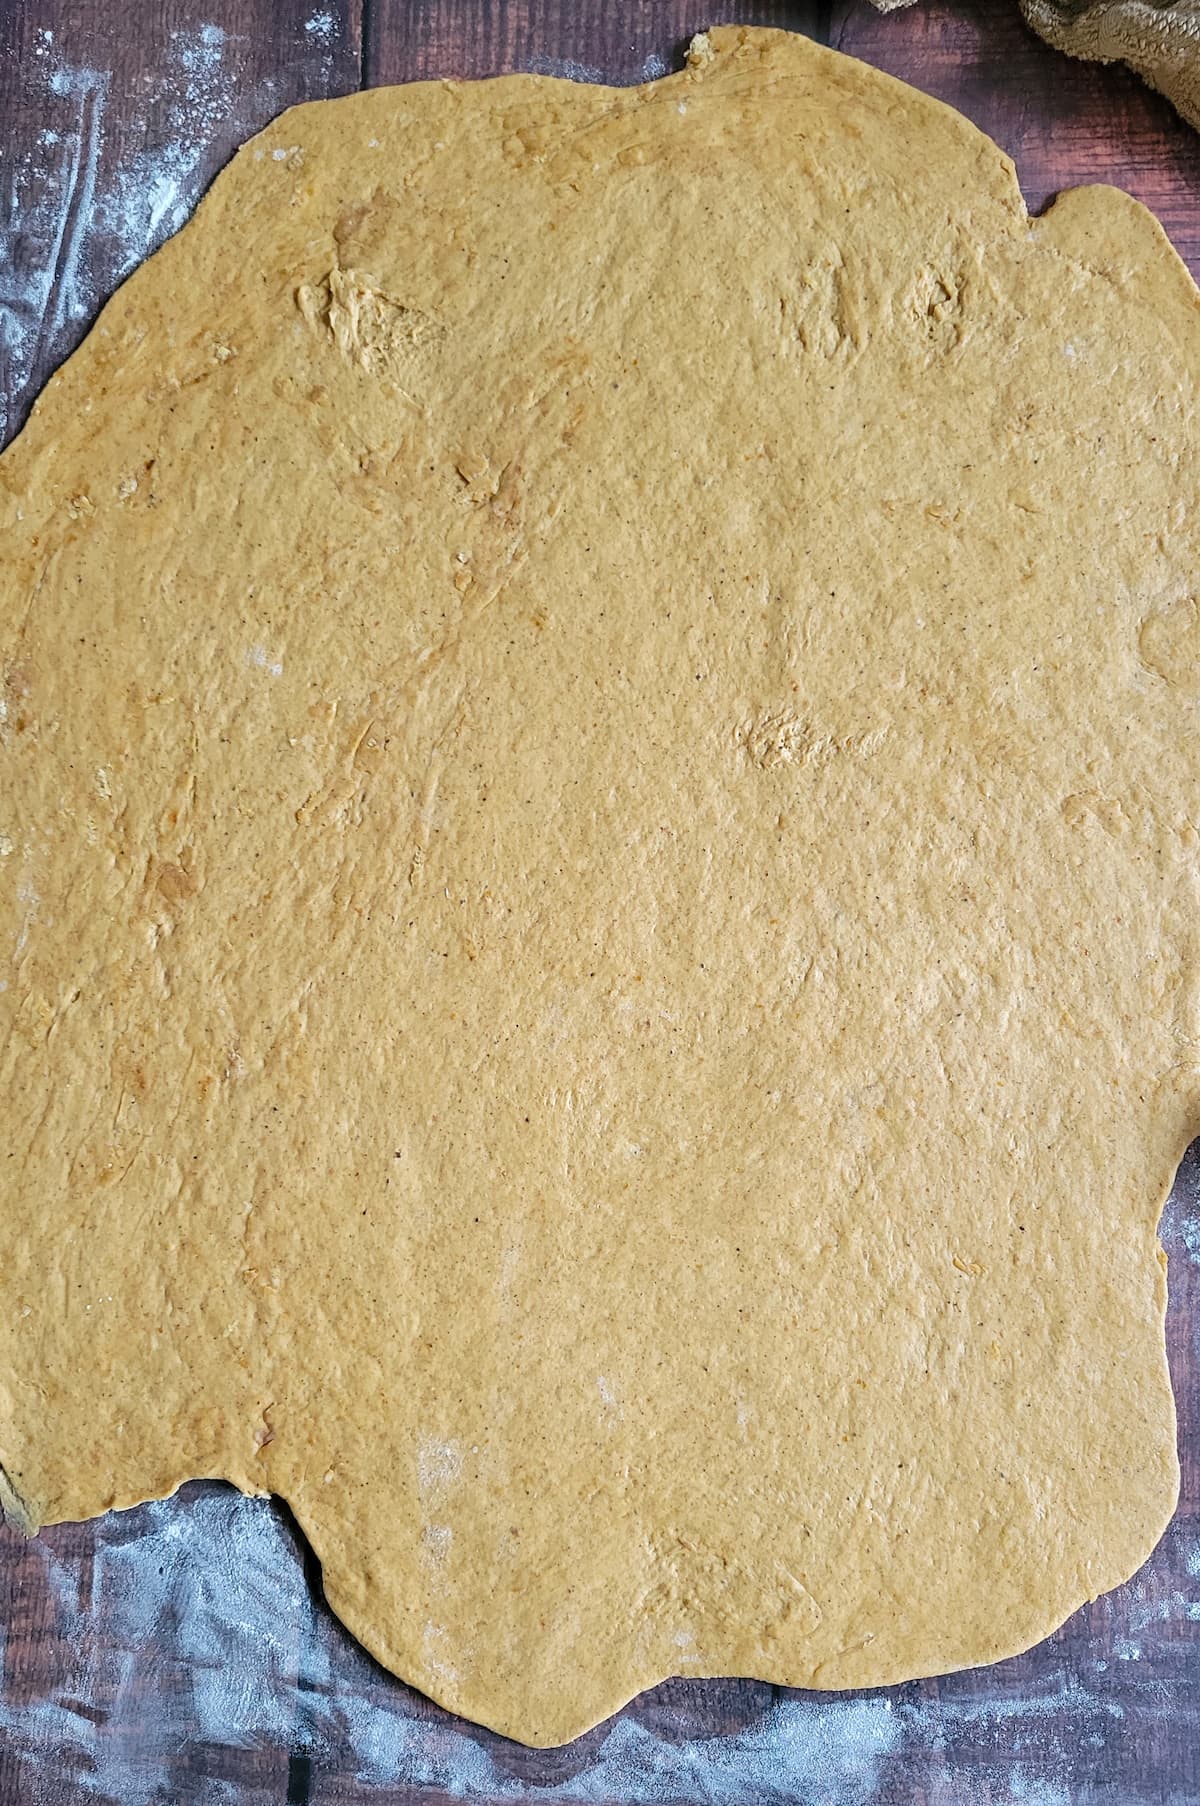 orange dough rolled out into a rectangular/circular shape